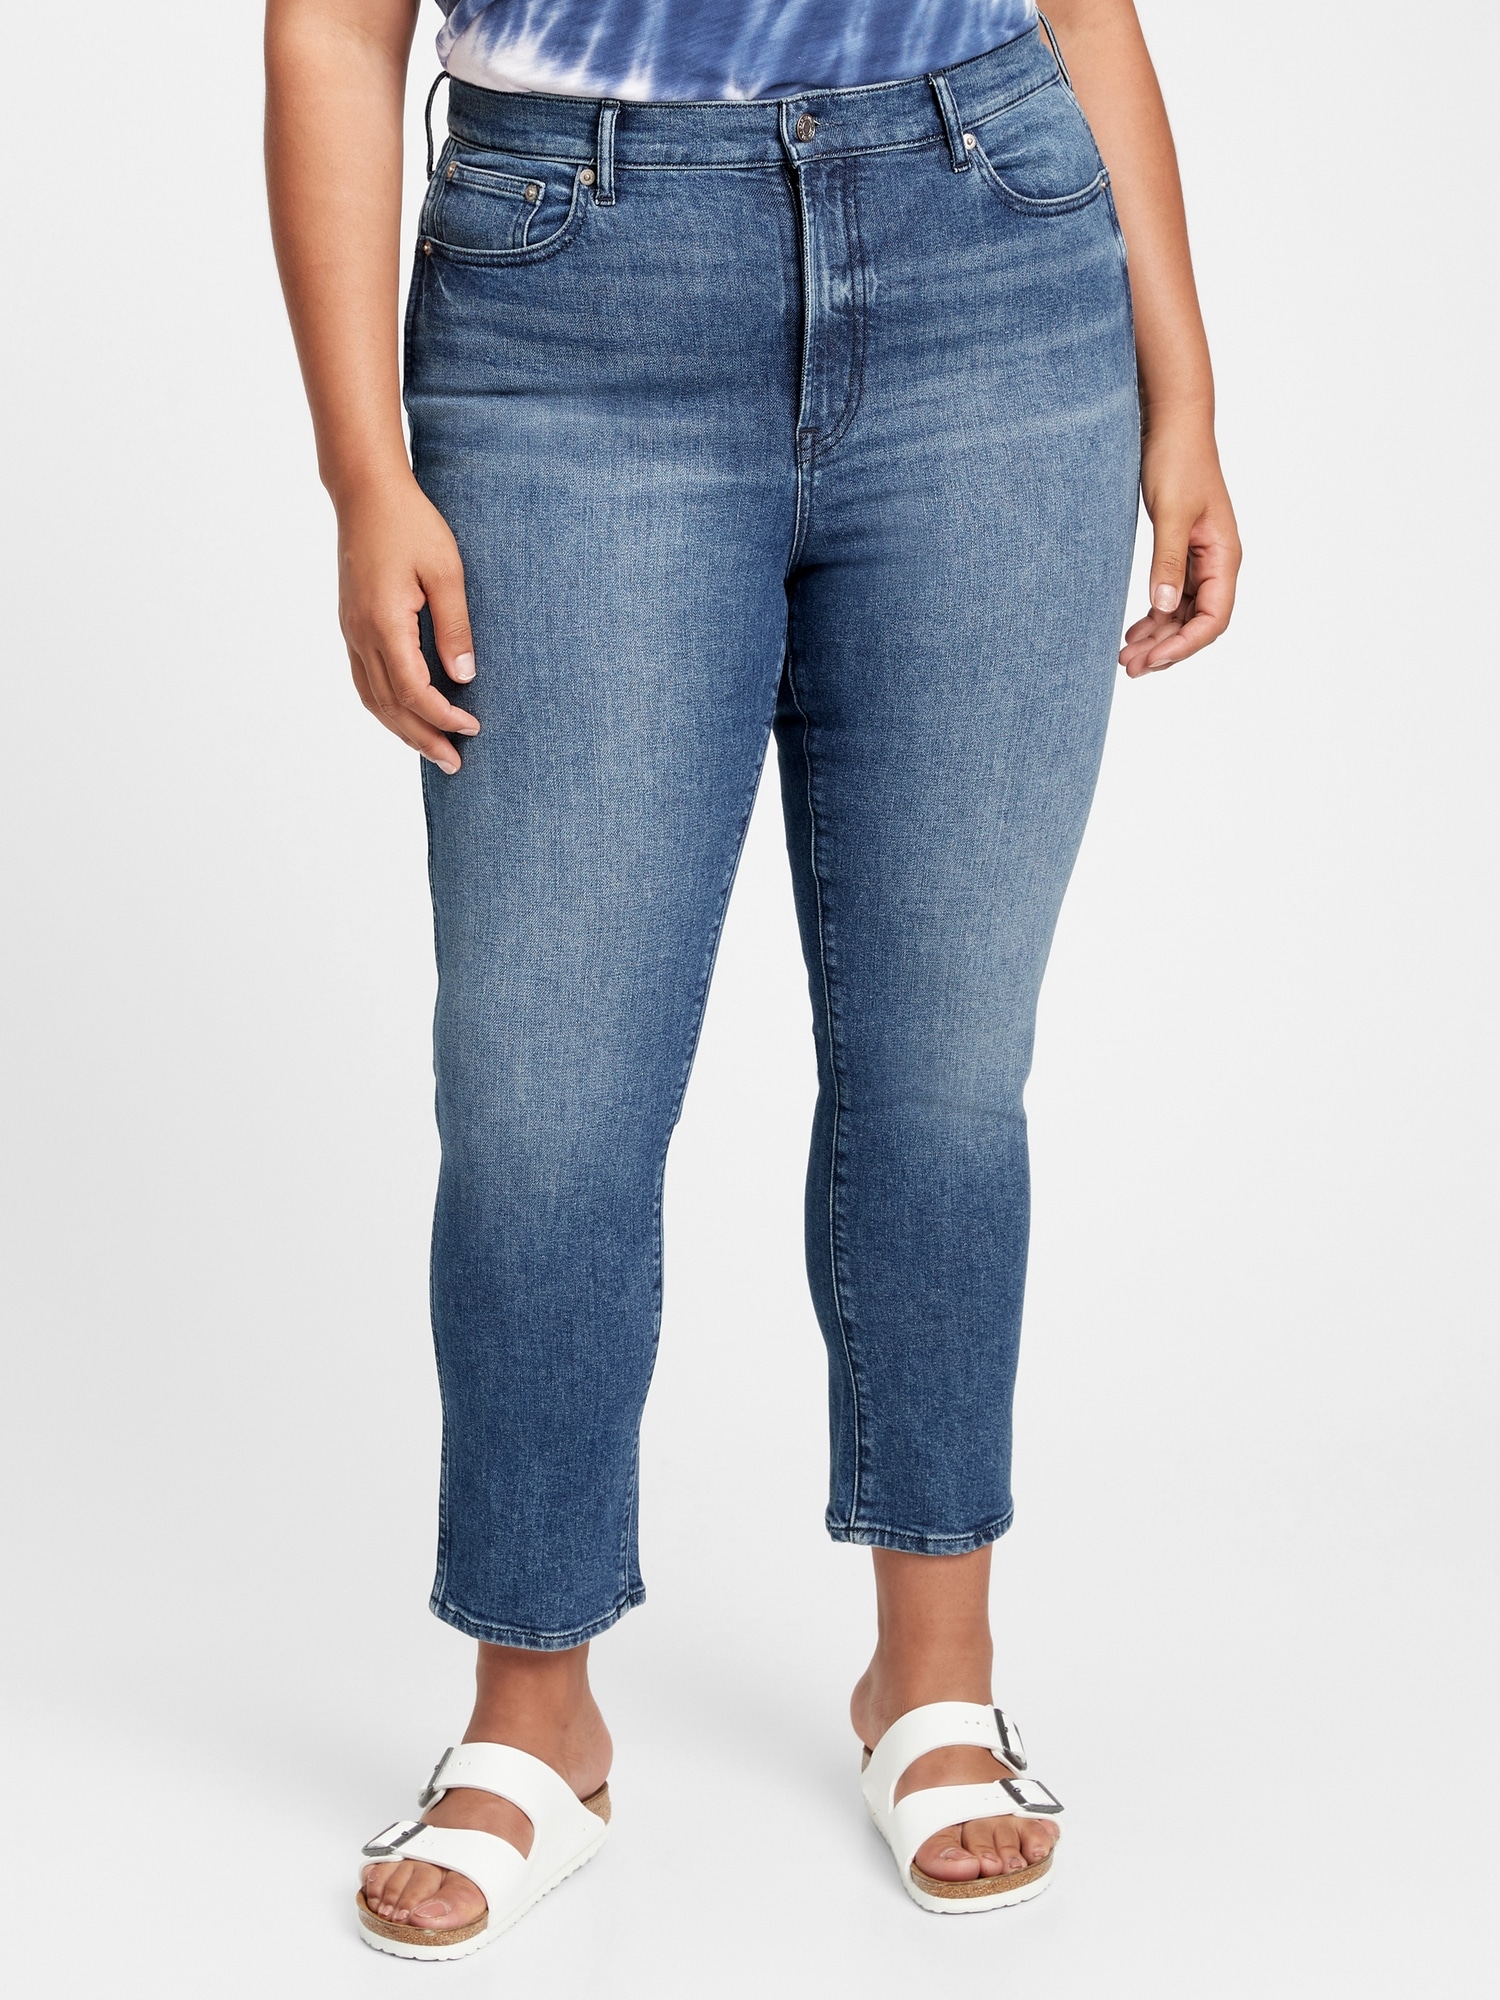 High Rise Vintage Slim Jeans | Gap Factory